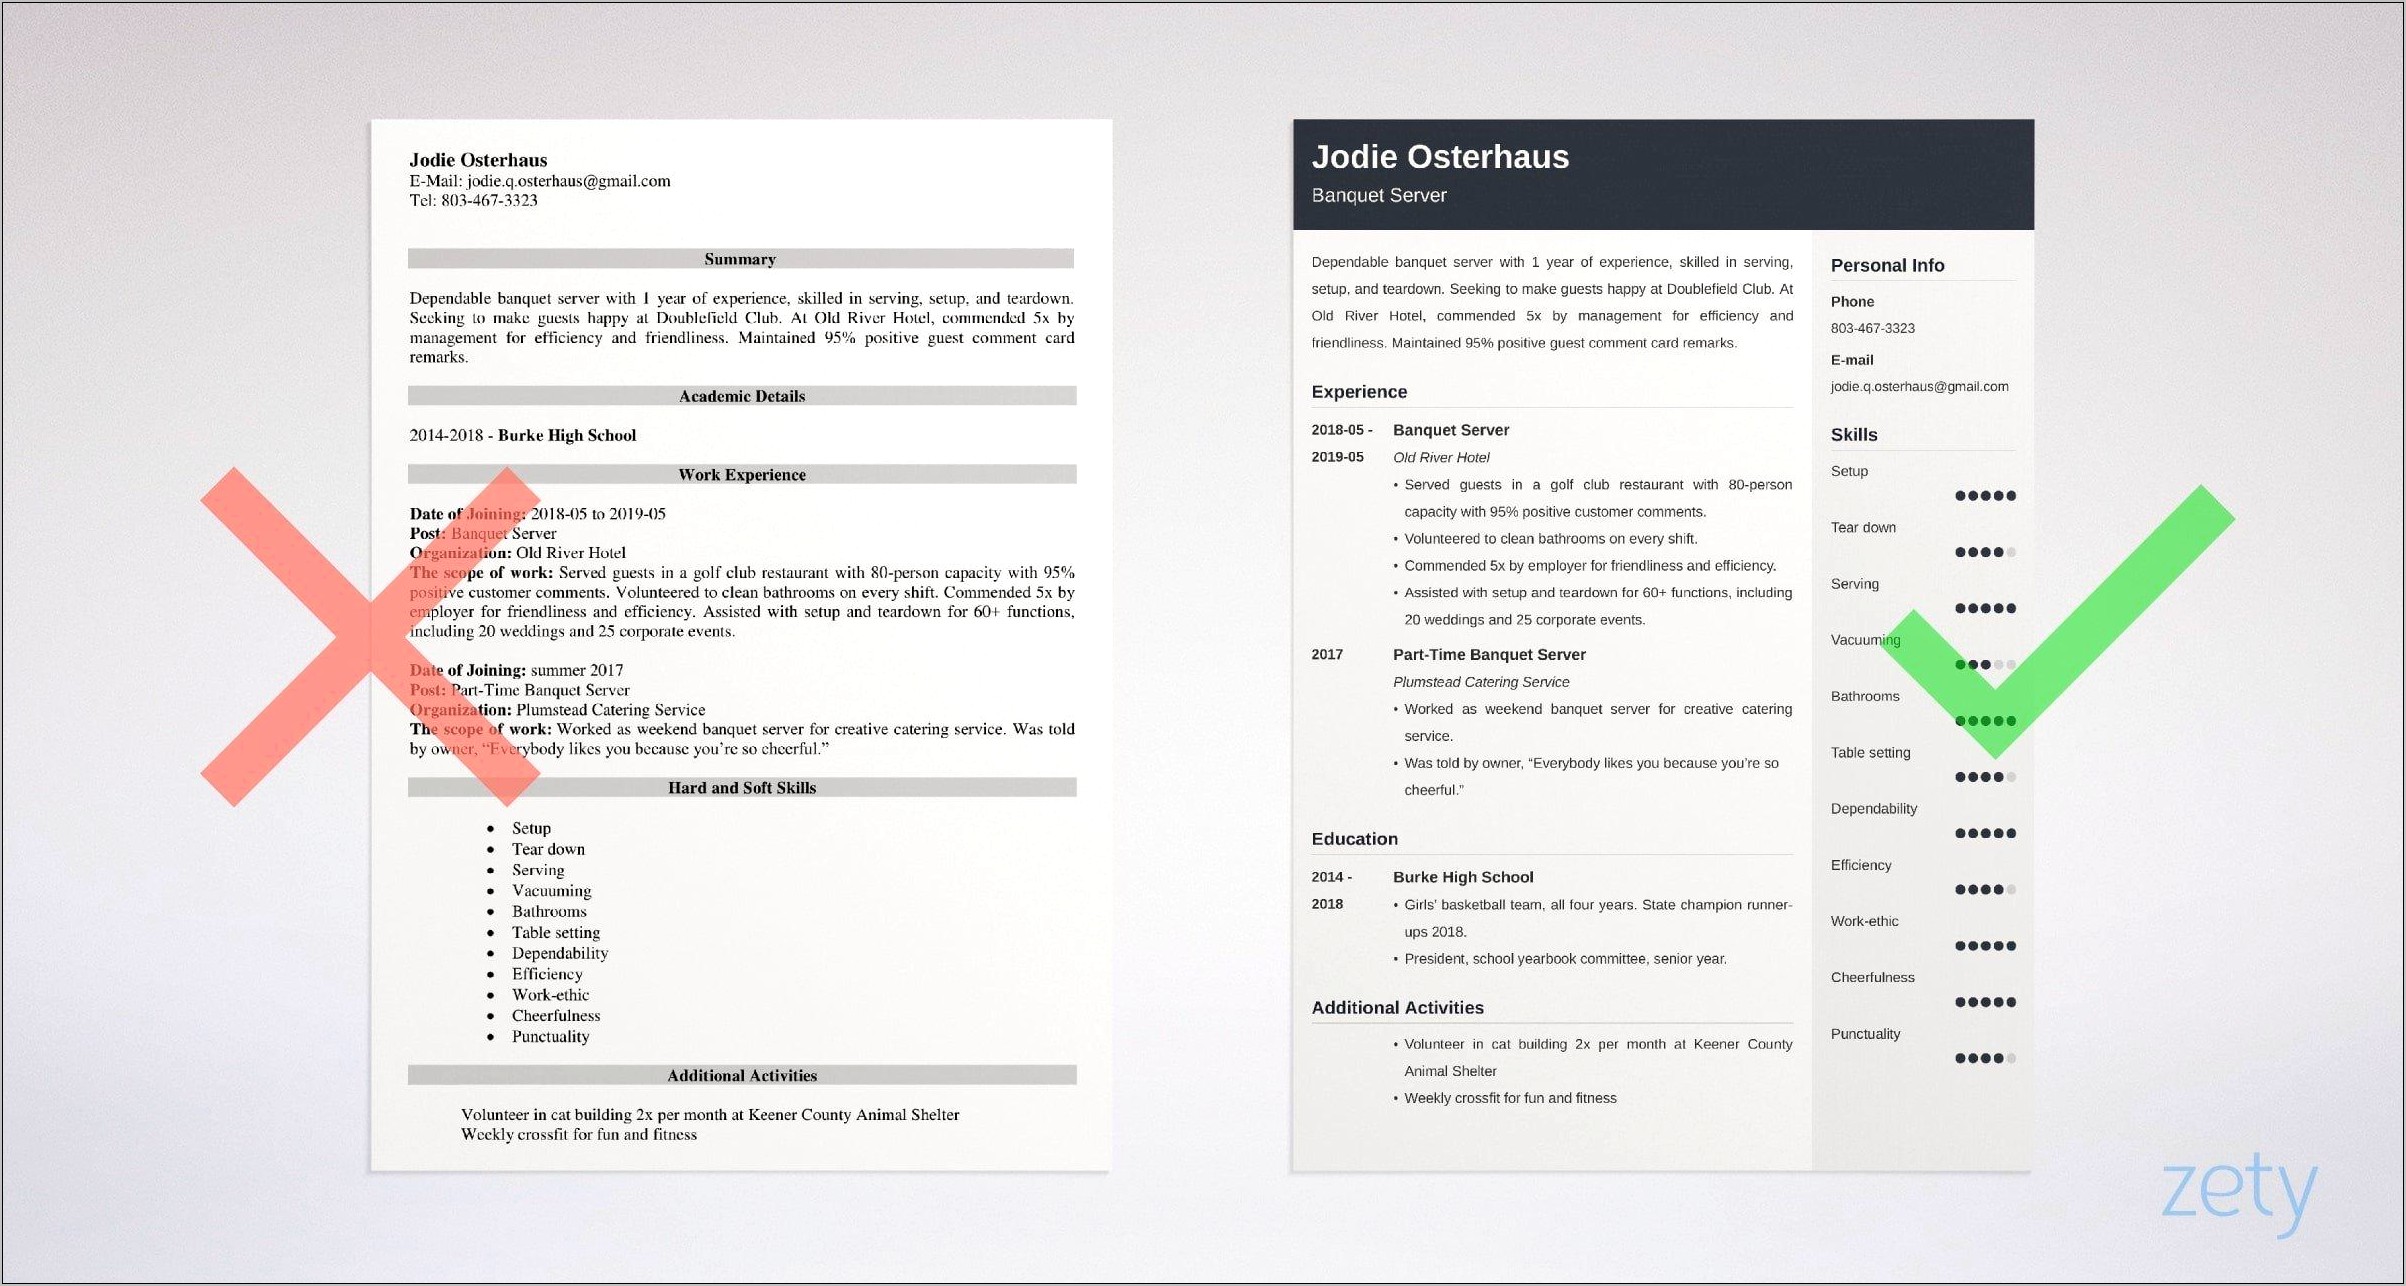 Resume Job Description For Banquet Server